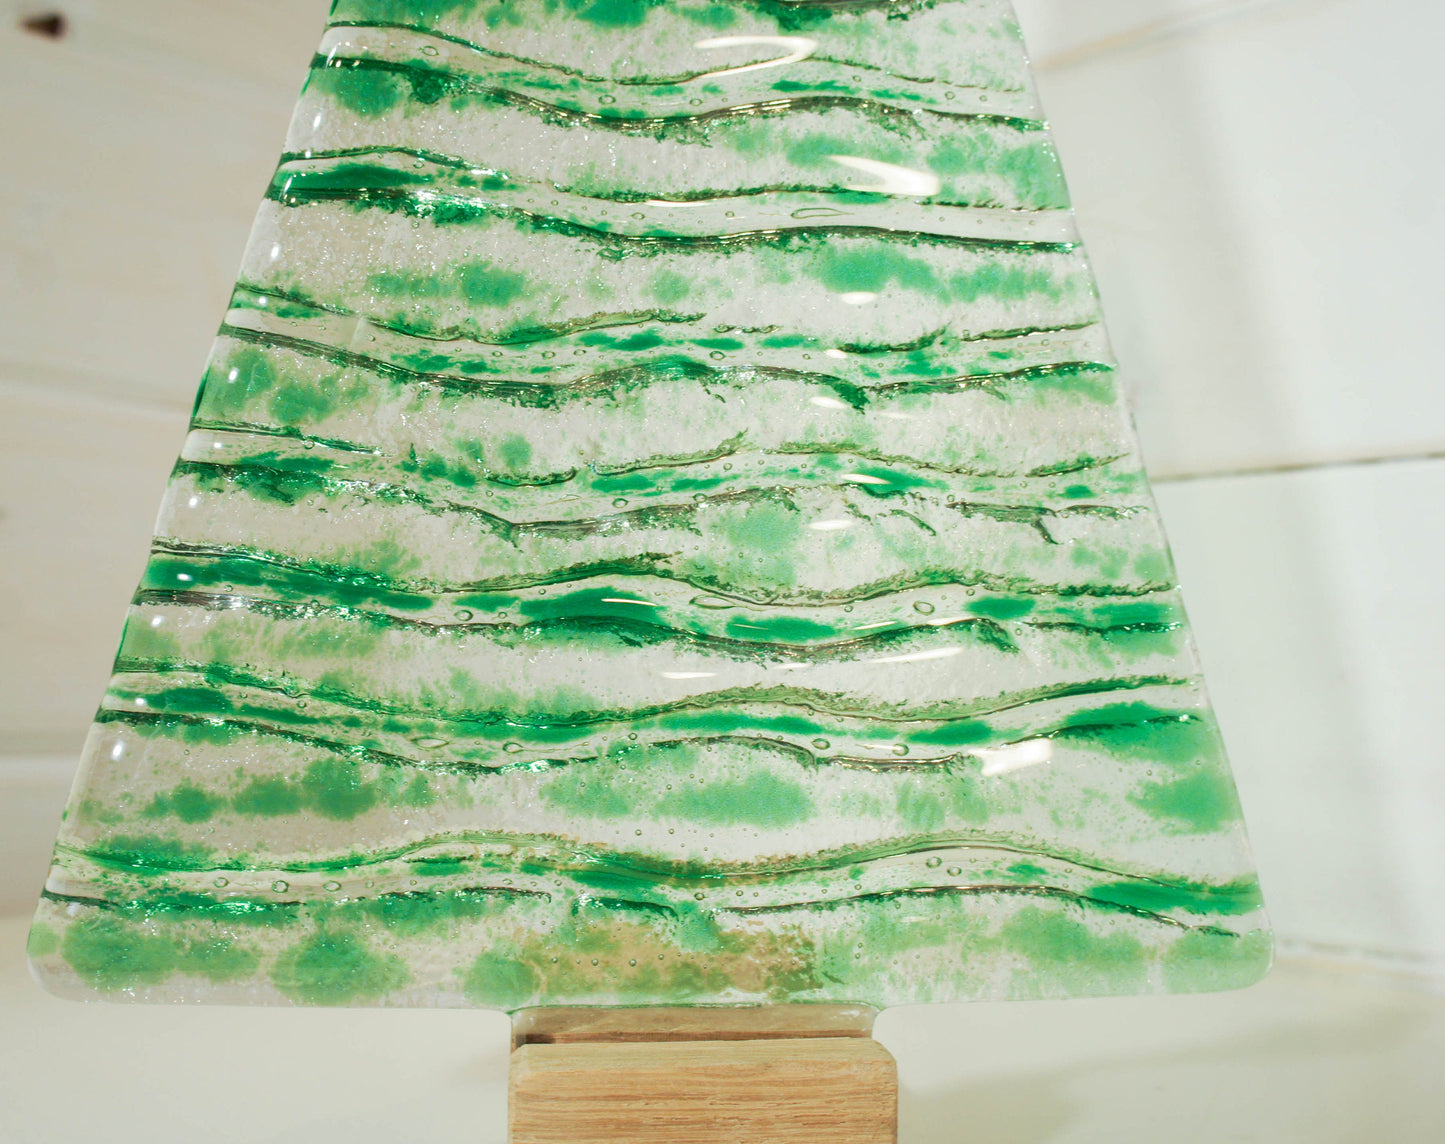 Glass Christmas Tree Decoration